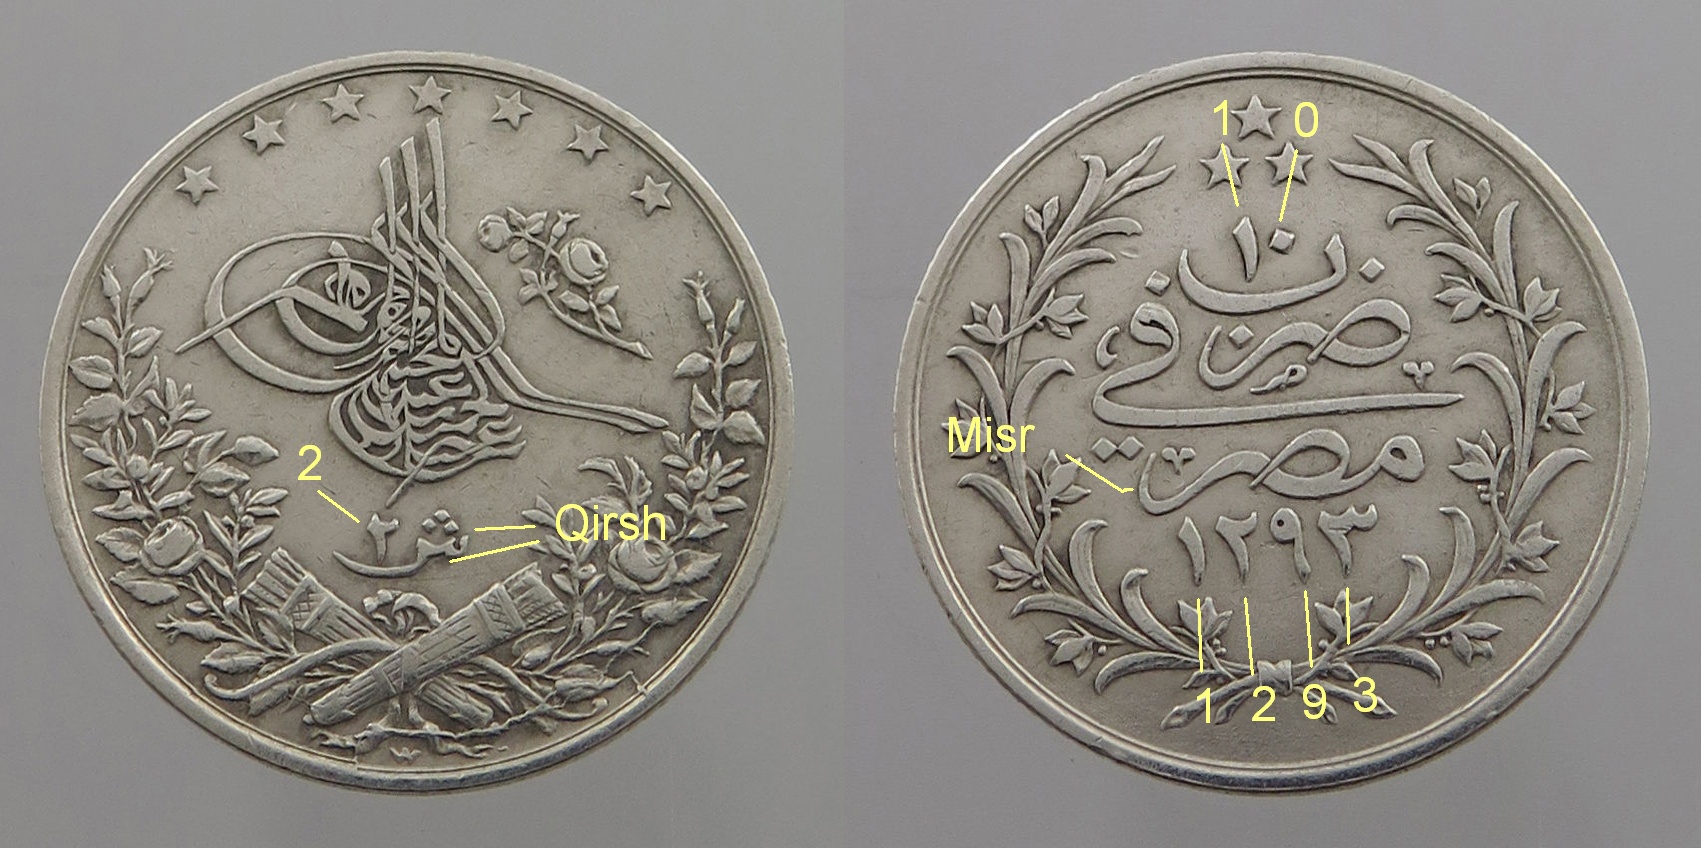 Ottoman-monnaie-1884-ID.jpg